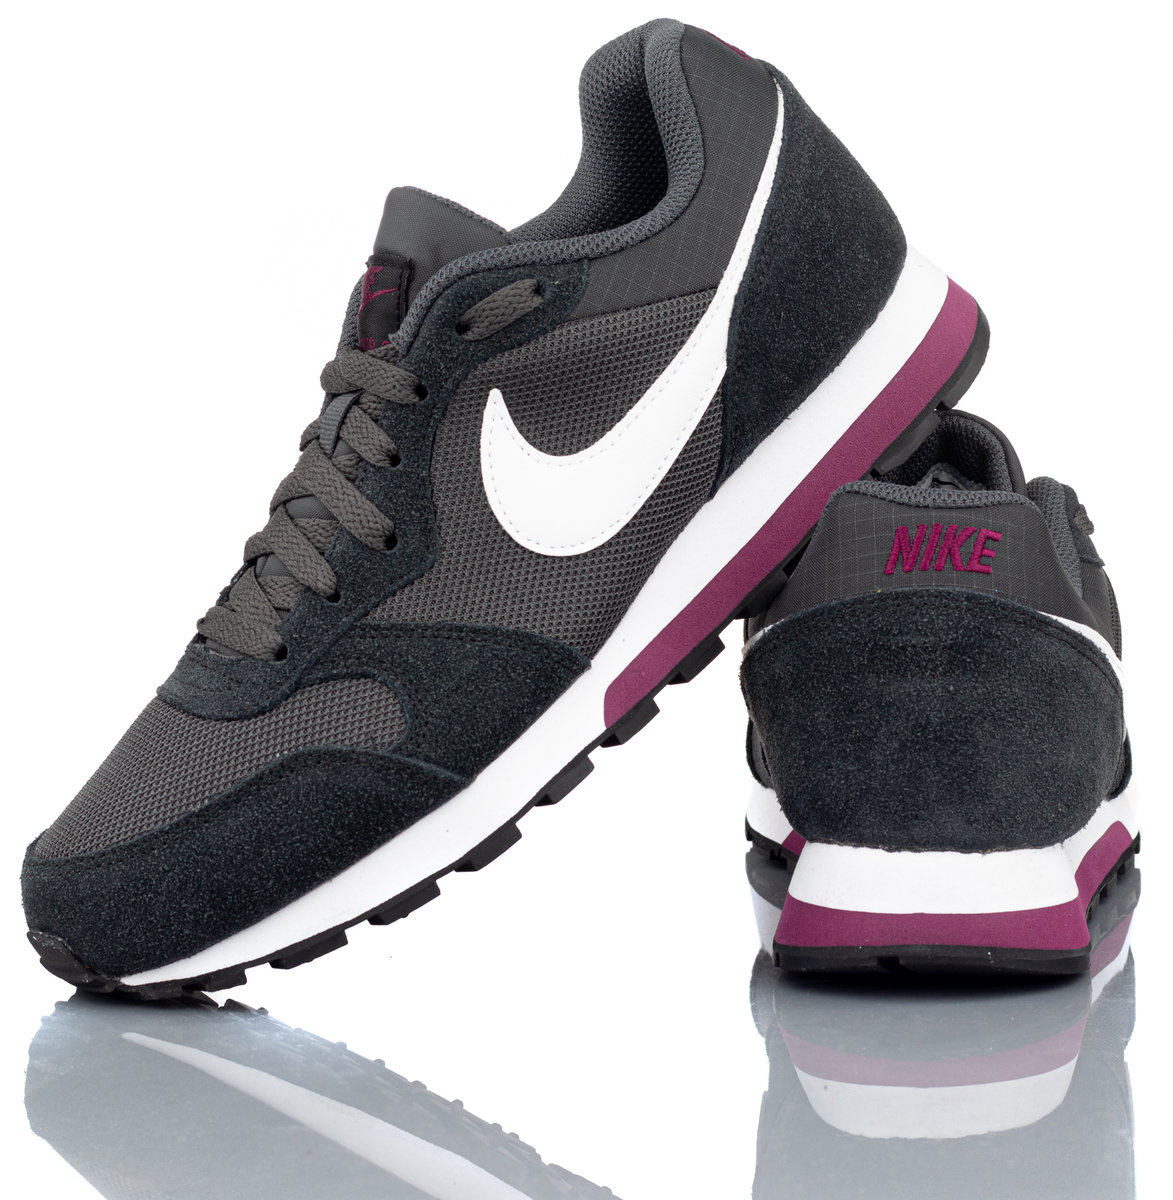 bereiken menigte het formulier Buty Damskie Nike Md Runner 2 749869 012 R-37,5 - Nike | Sport Sklep  EMPIK.COM